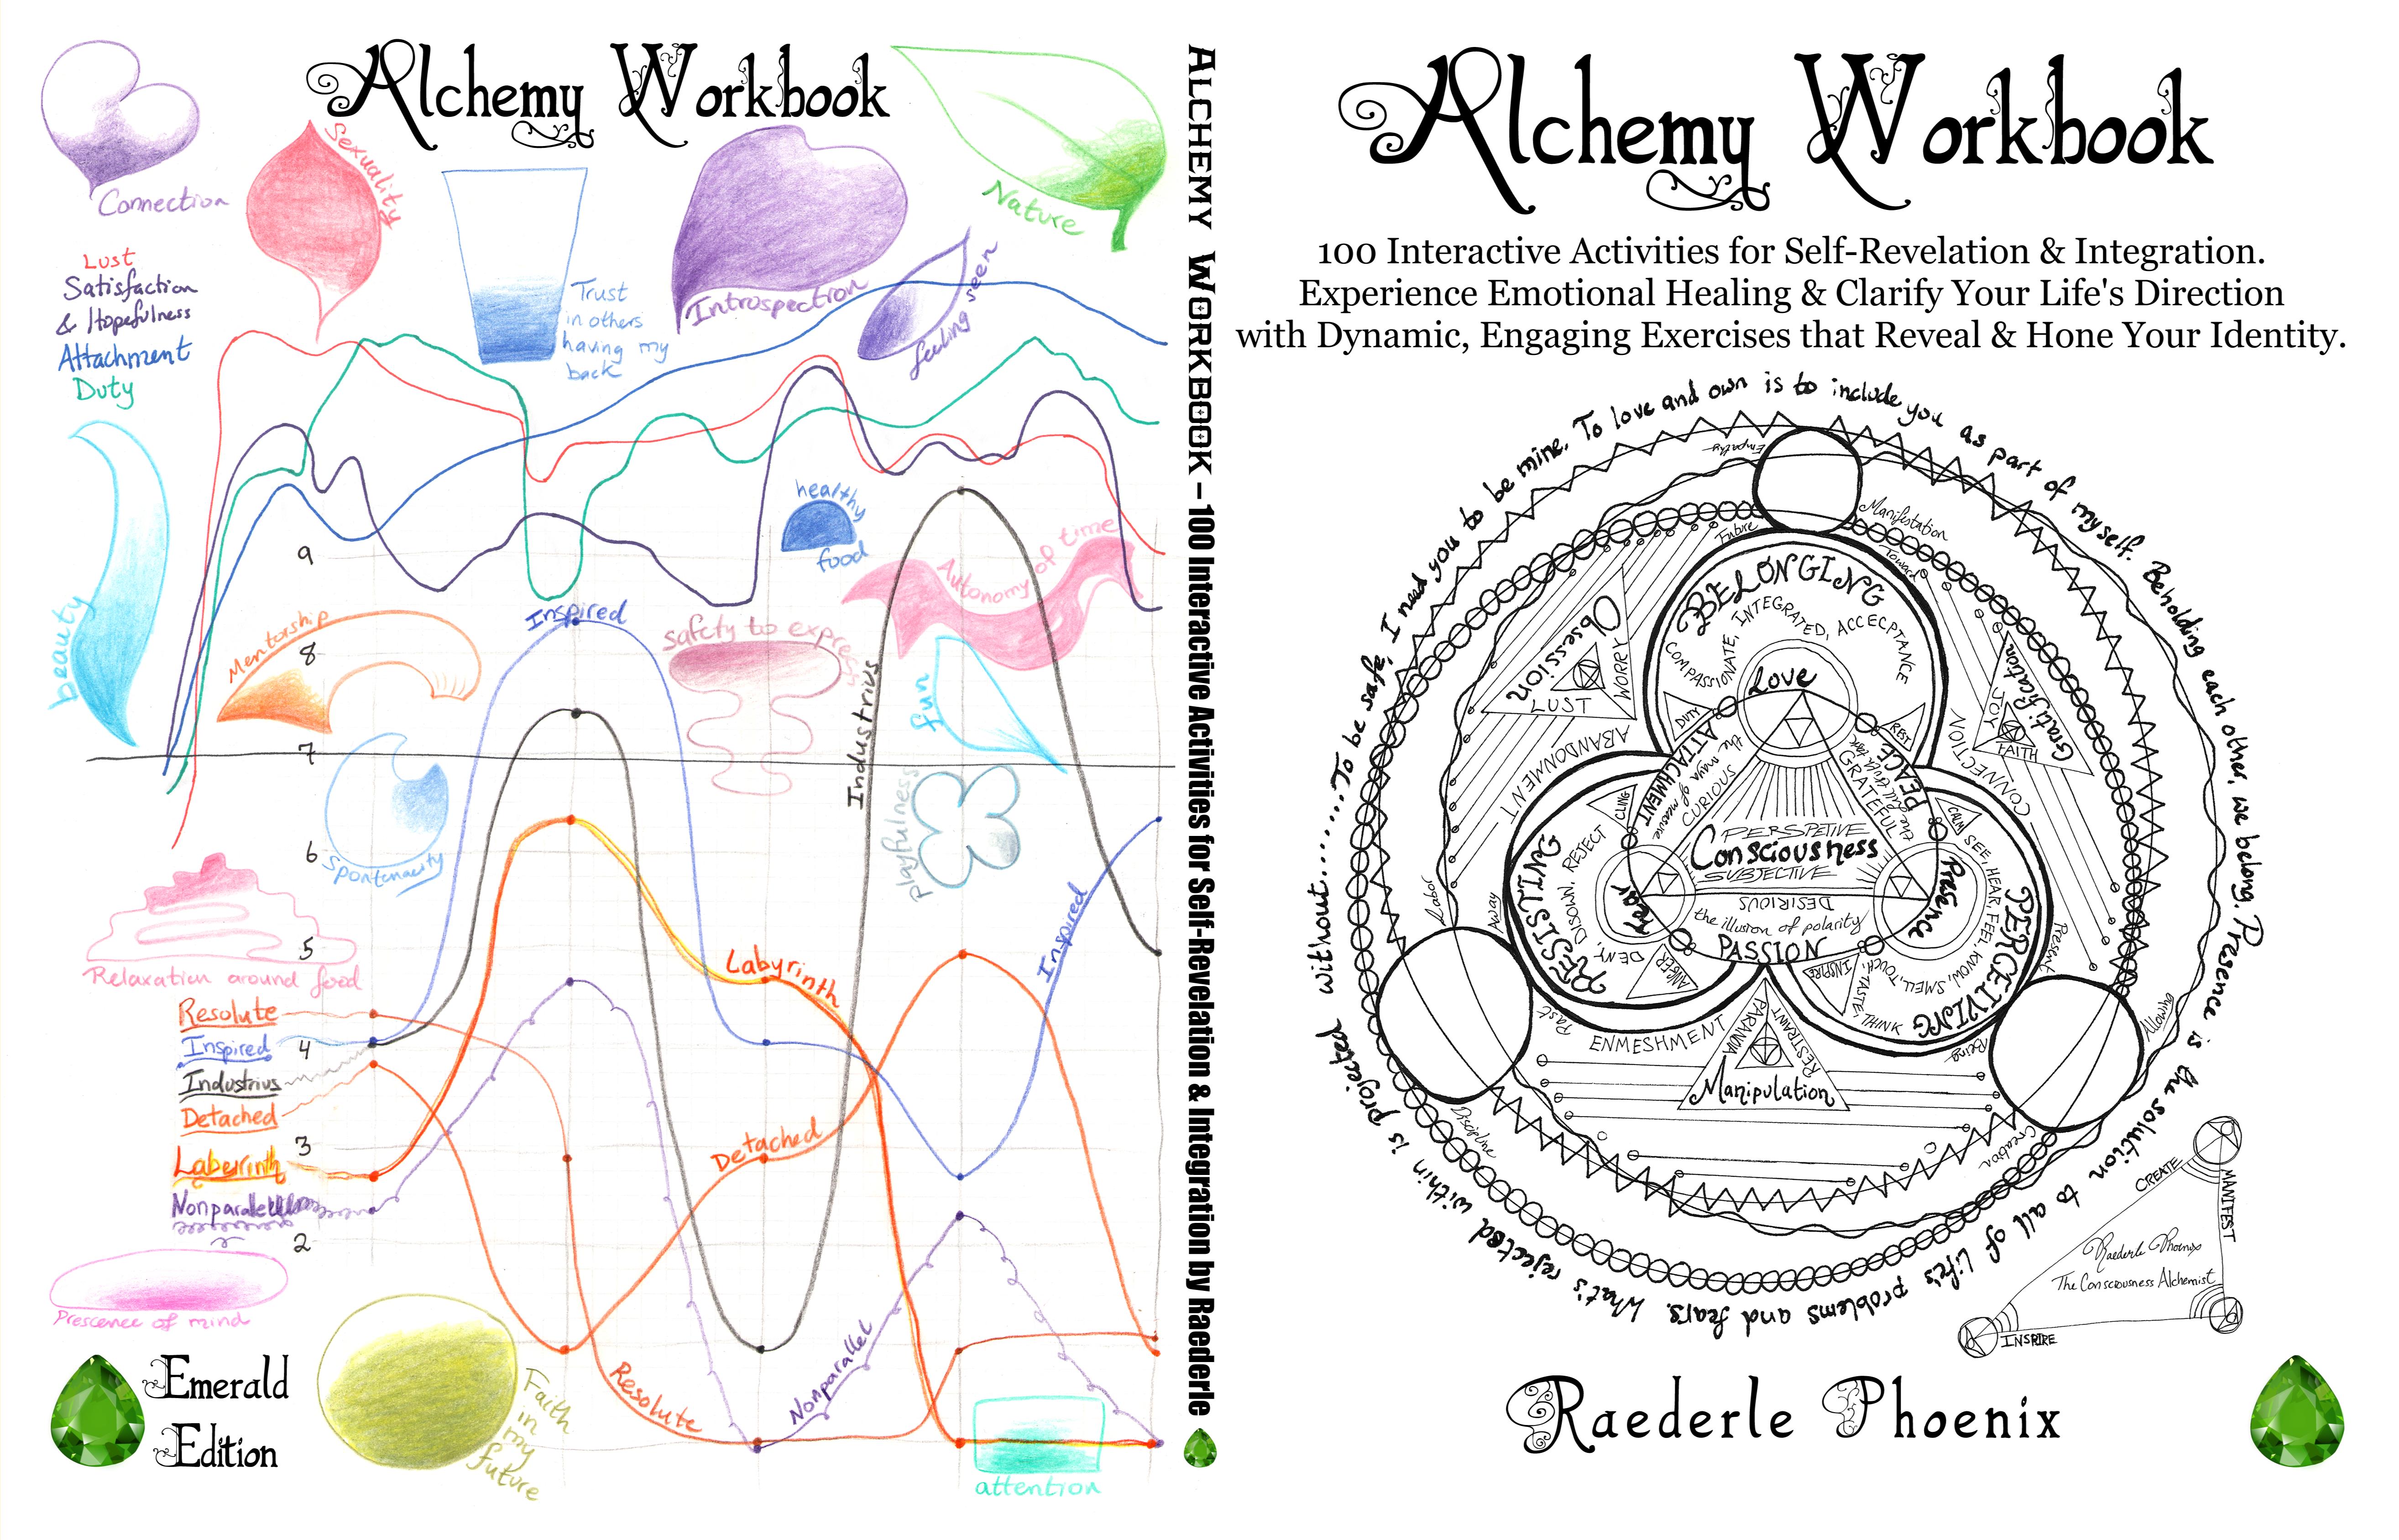 Alchemy Workbook cover image